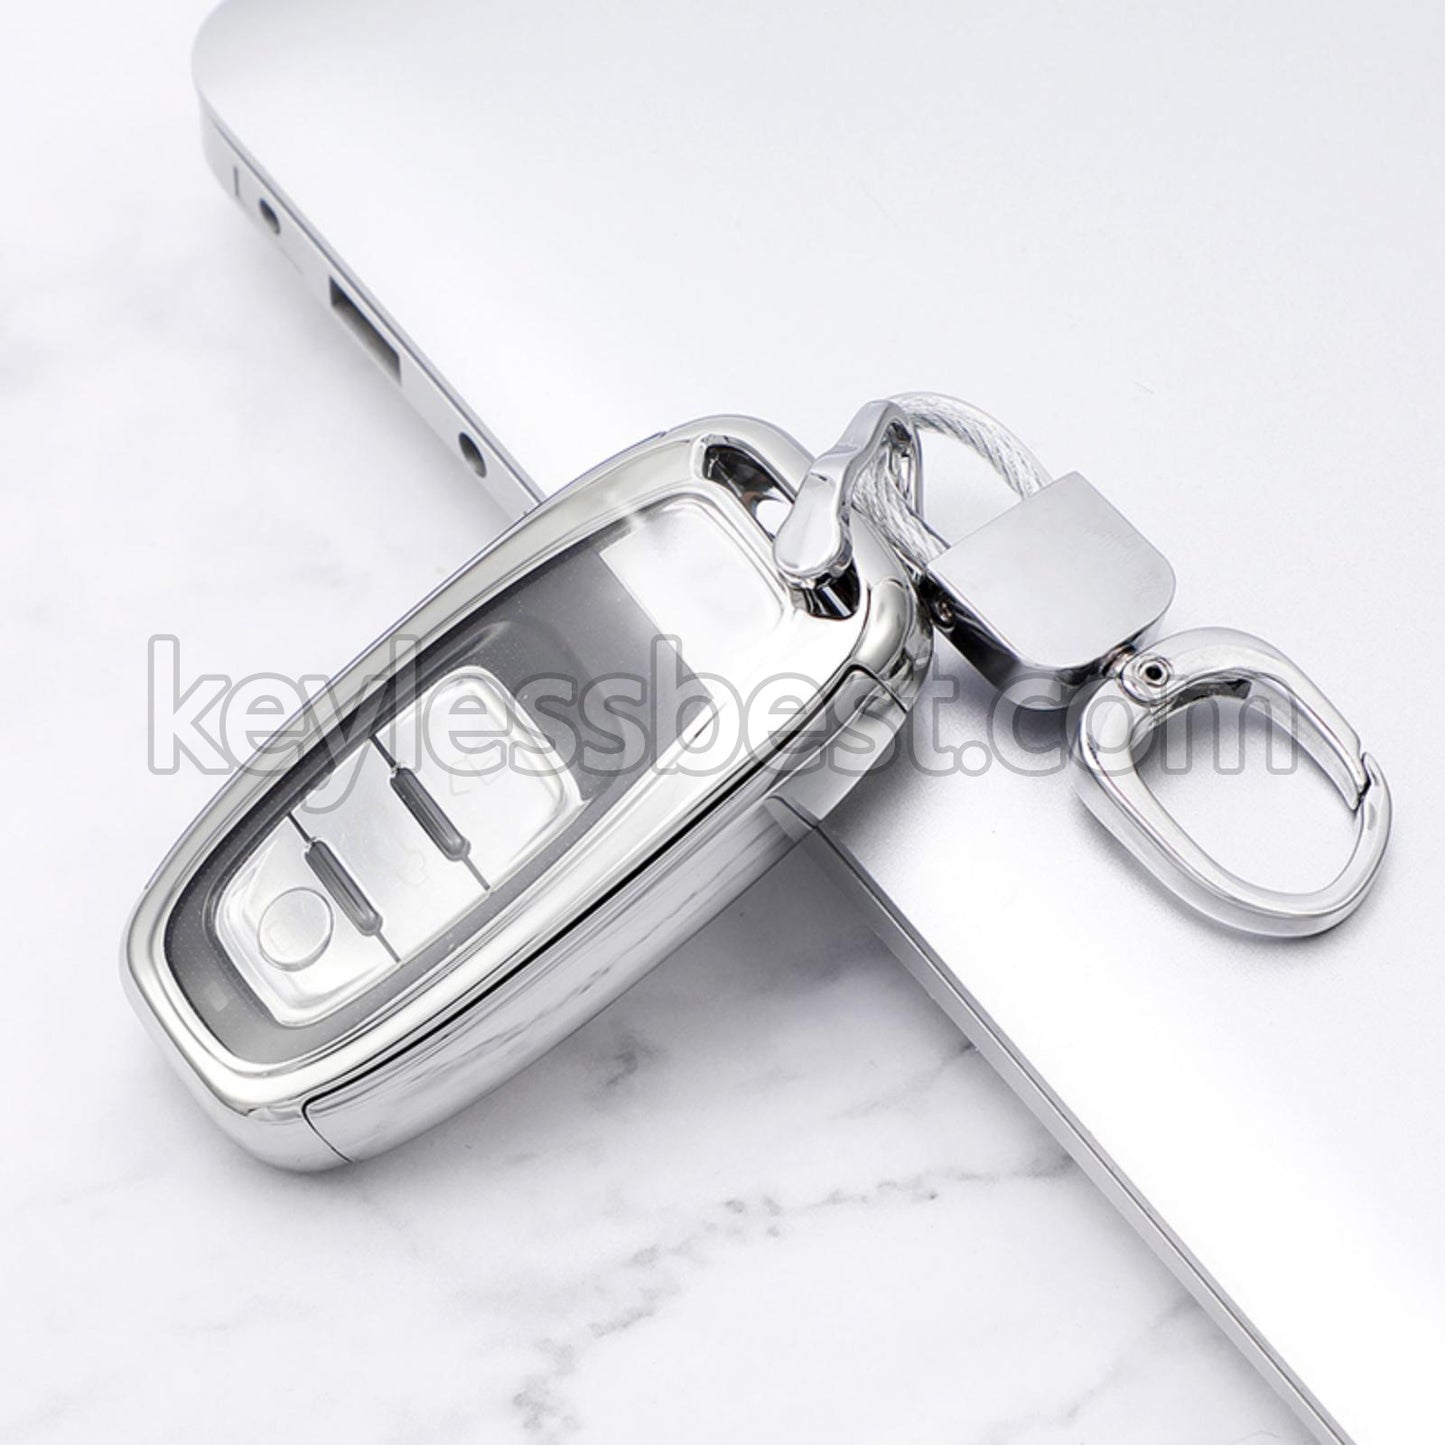 TPU Car Key cover For Audi Car Key cover case holder